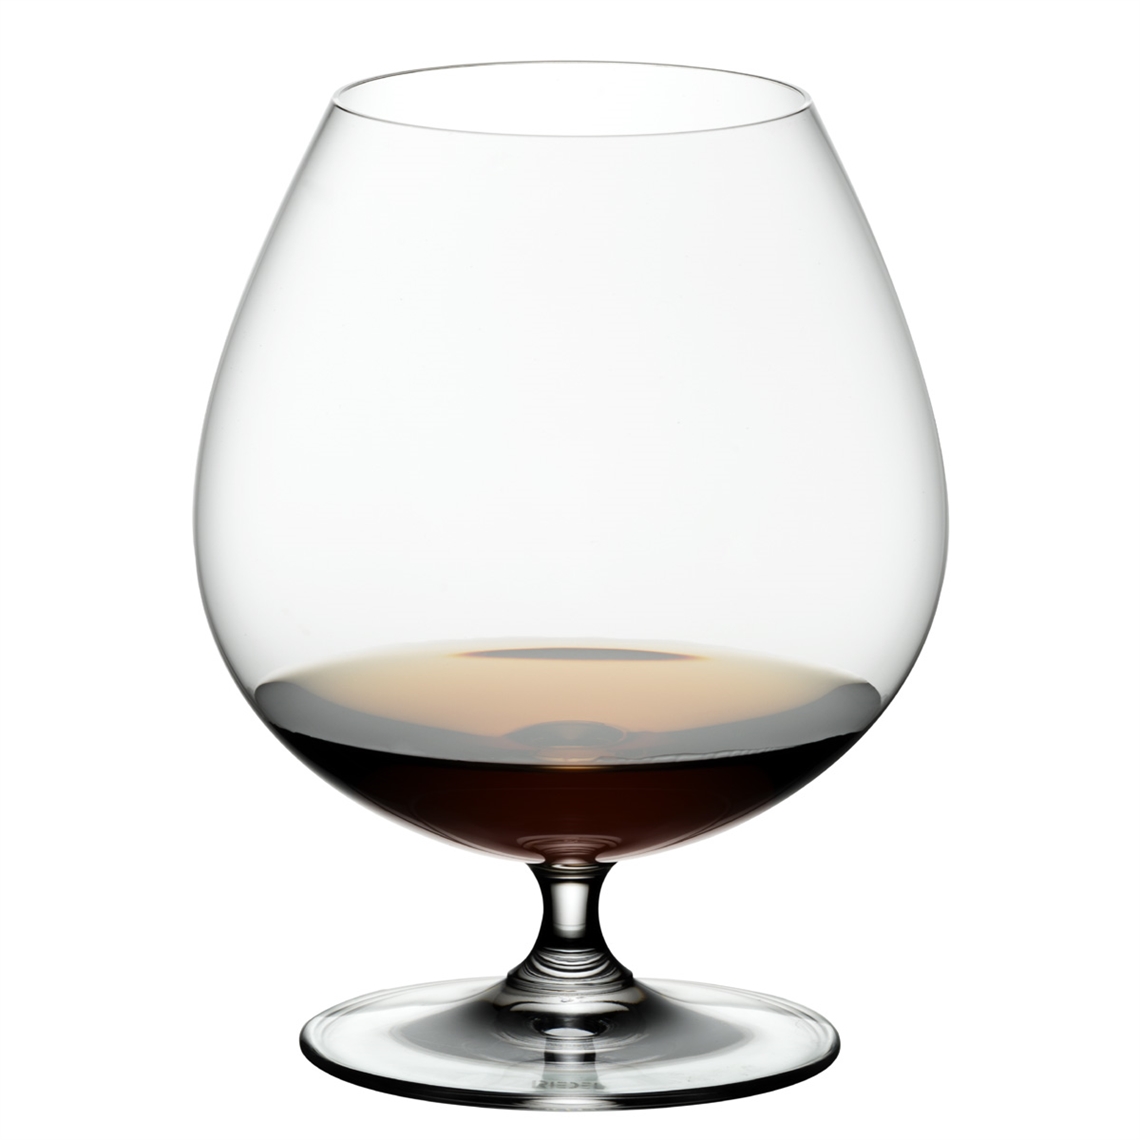 View more restaurant glasses - riedel from our Spirit Glasses range